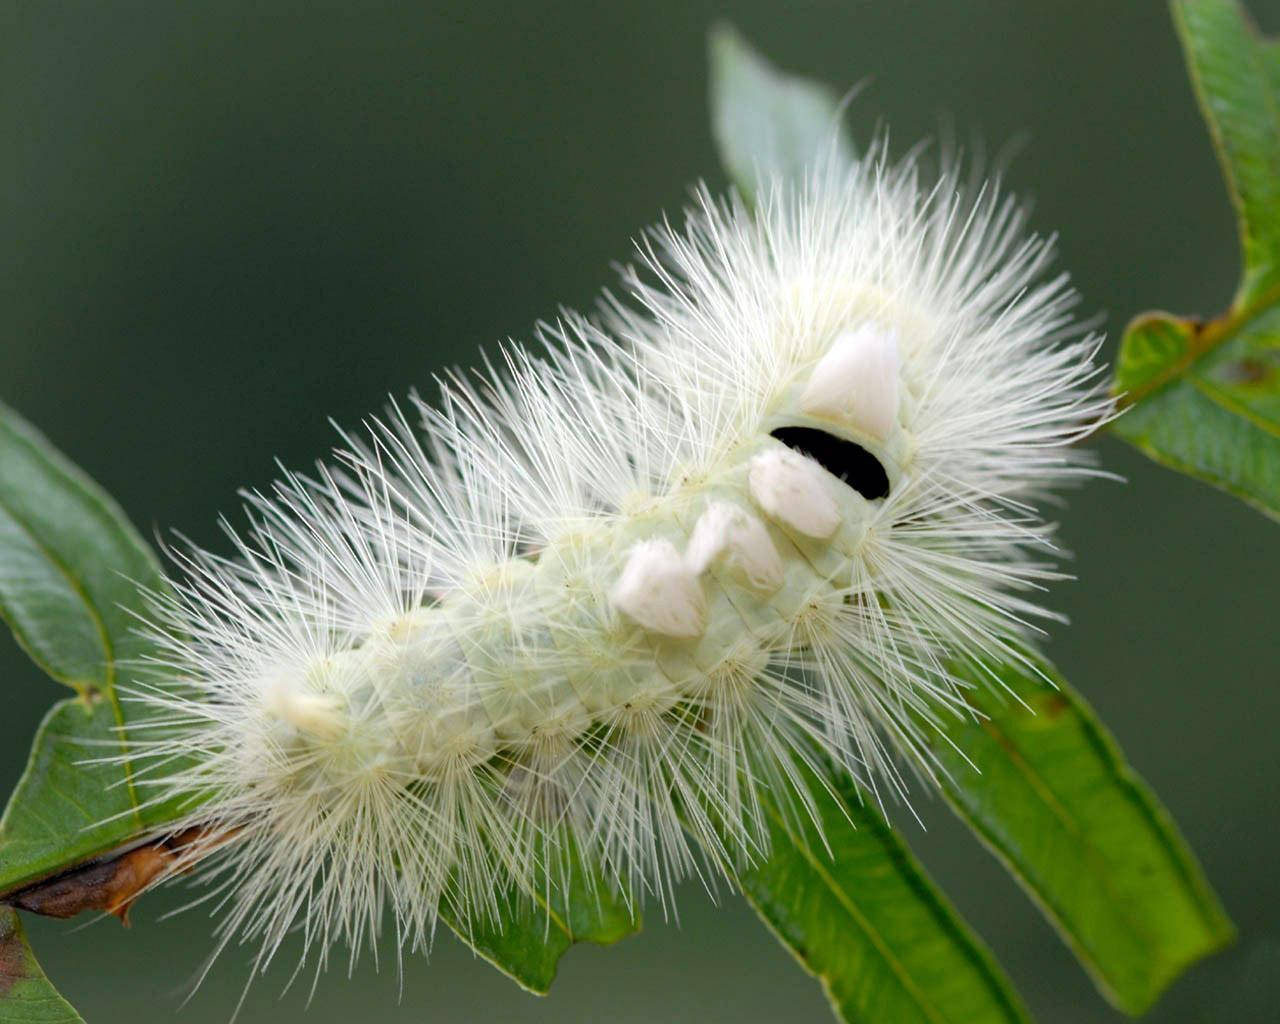 Caterpillar With White Long Hair